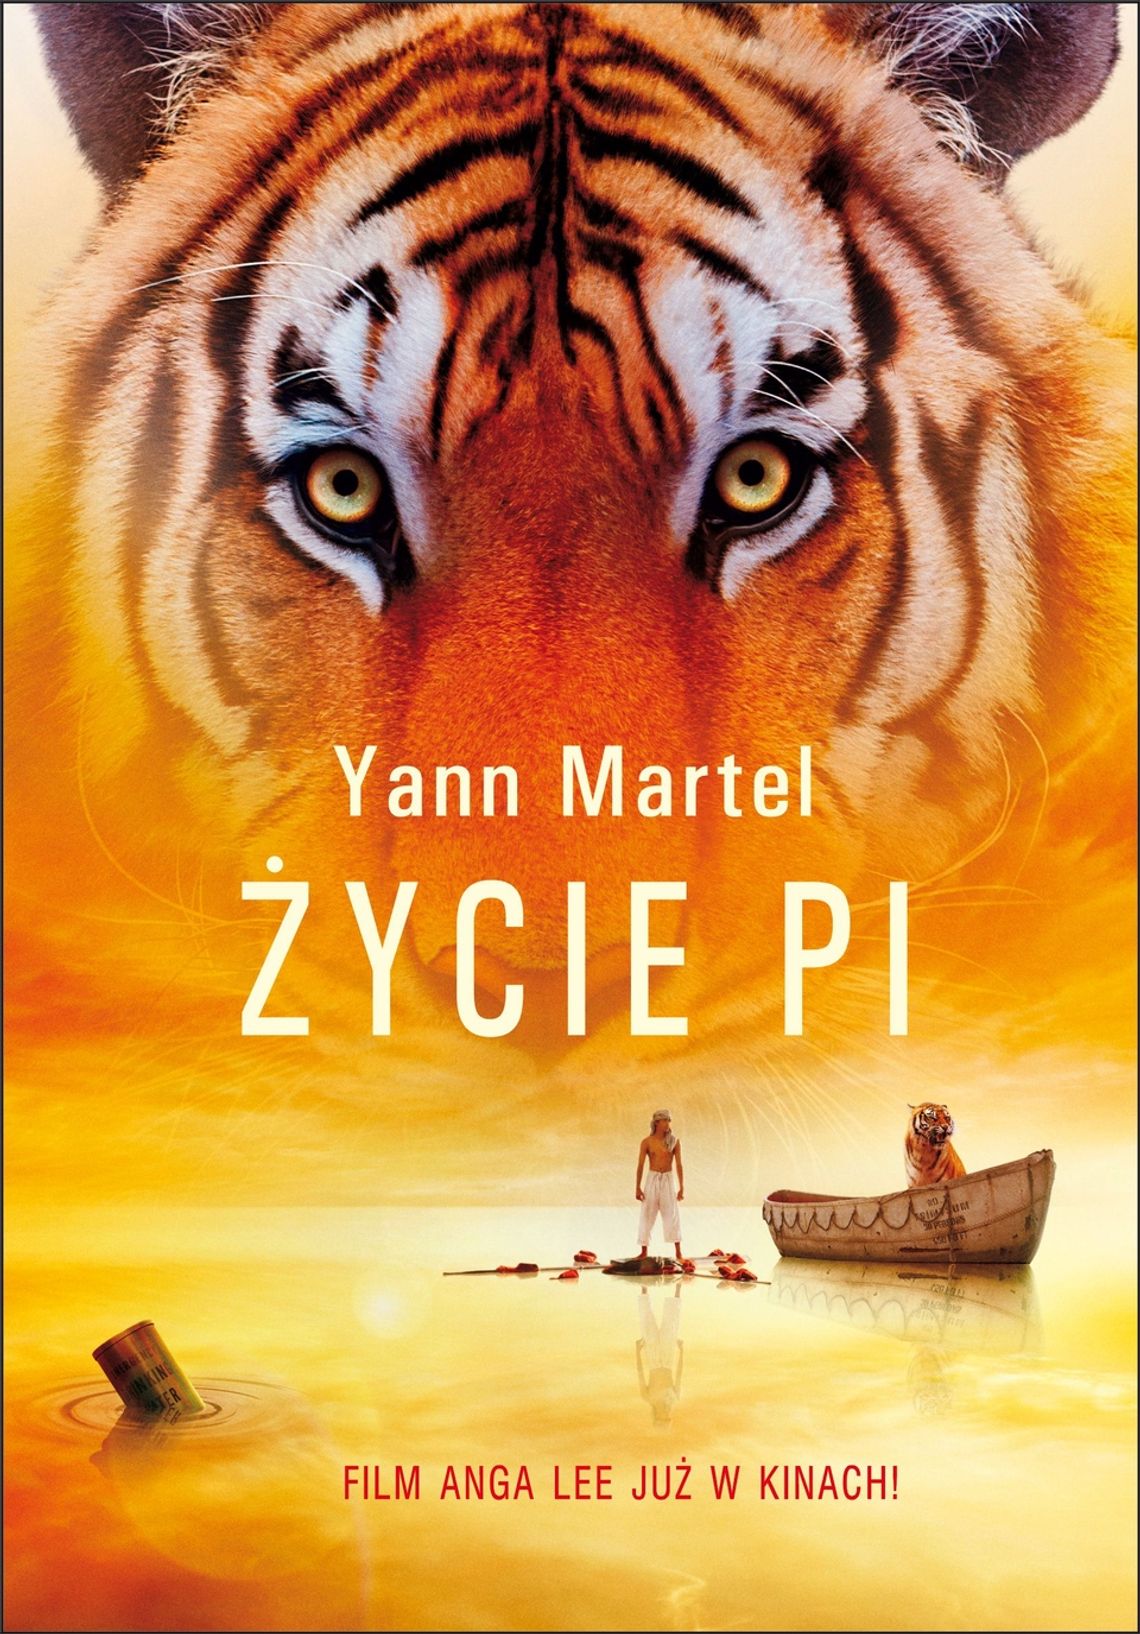 "Życie Pi" - Yann Martel